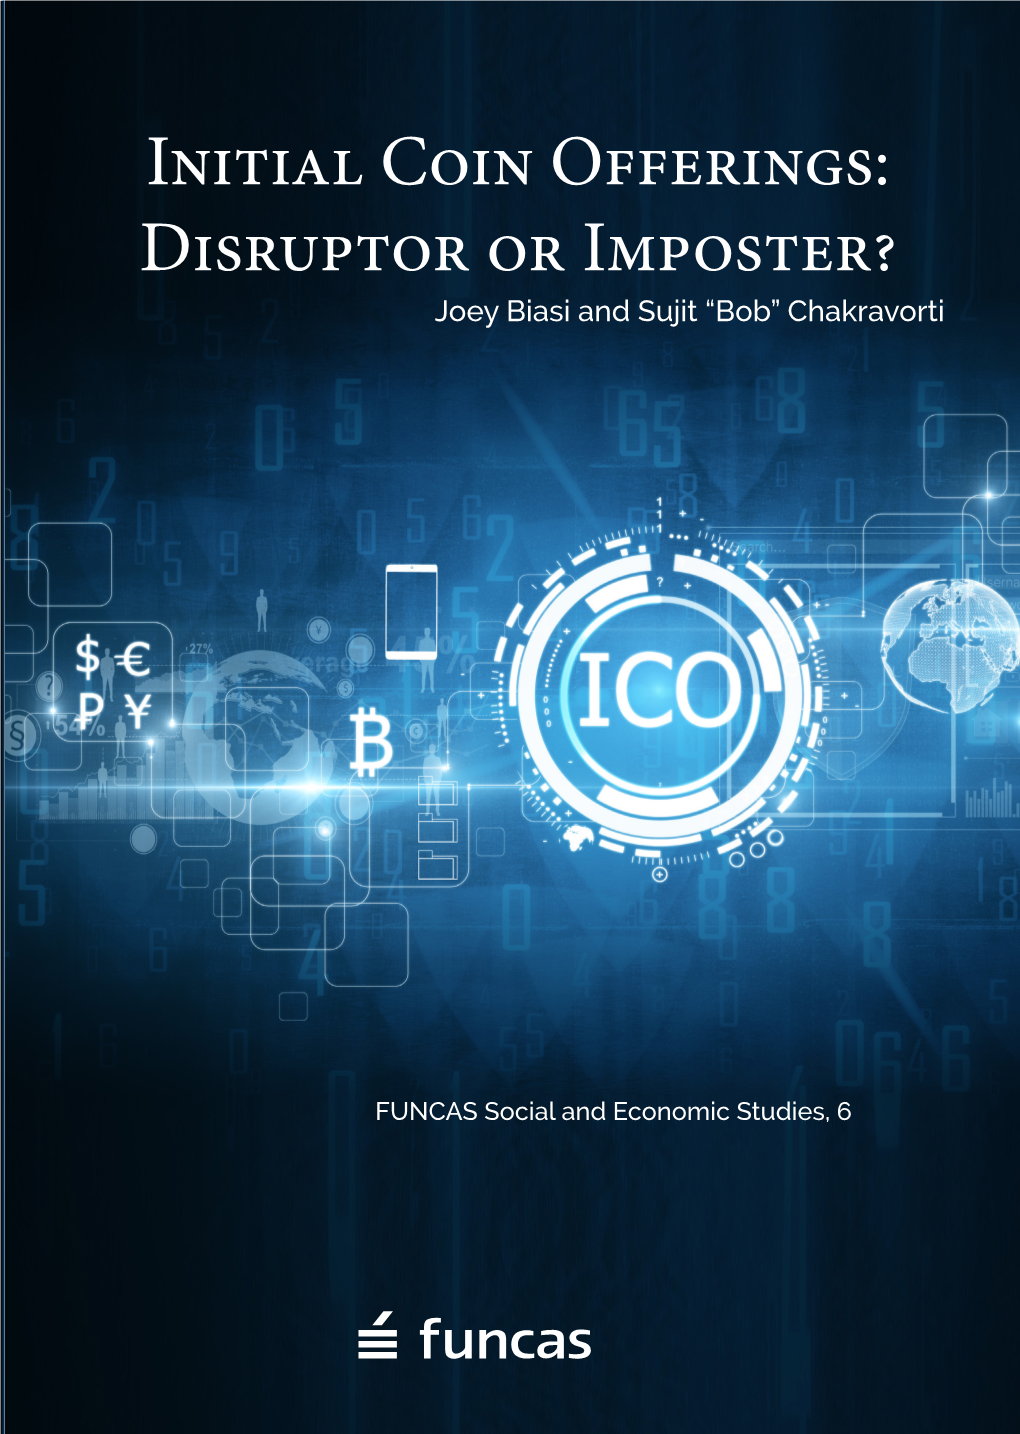 Initial Coin Offerings: Disruptor Or Imposter? Joey Biasi and Sujit “Bob” Chakravorti